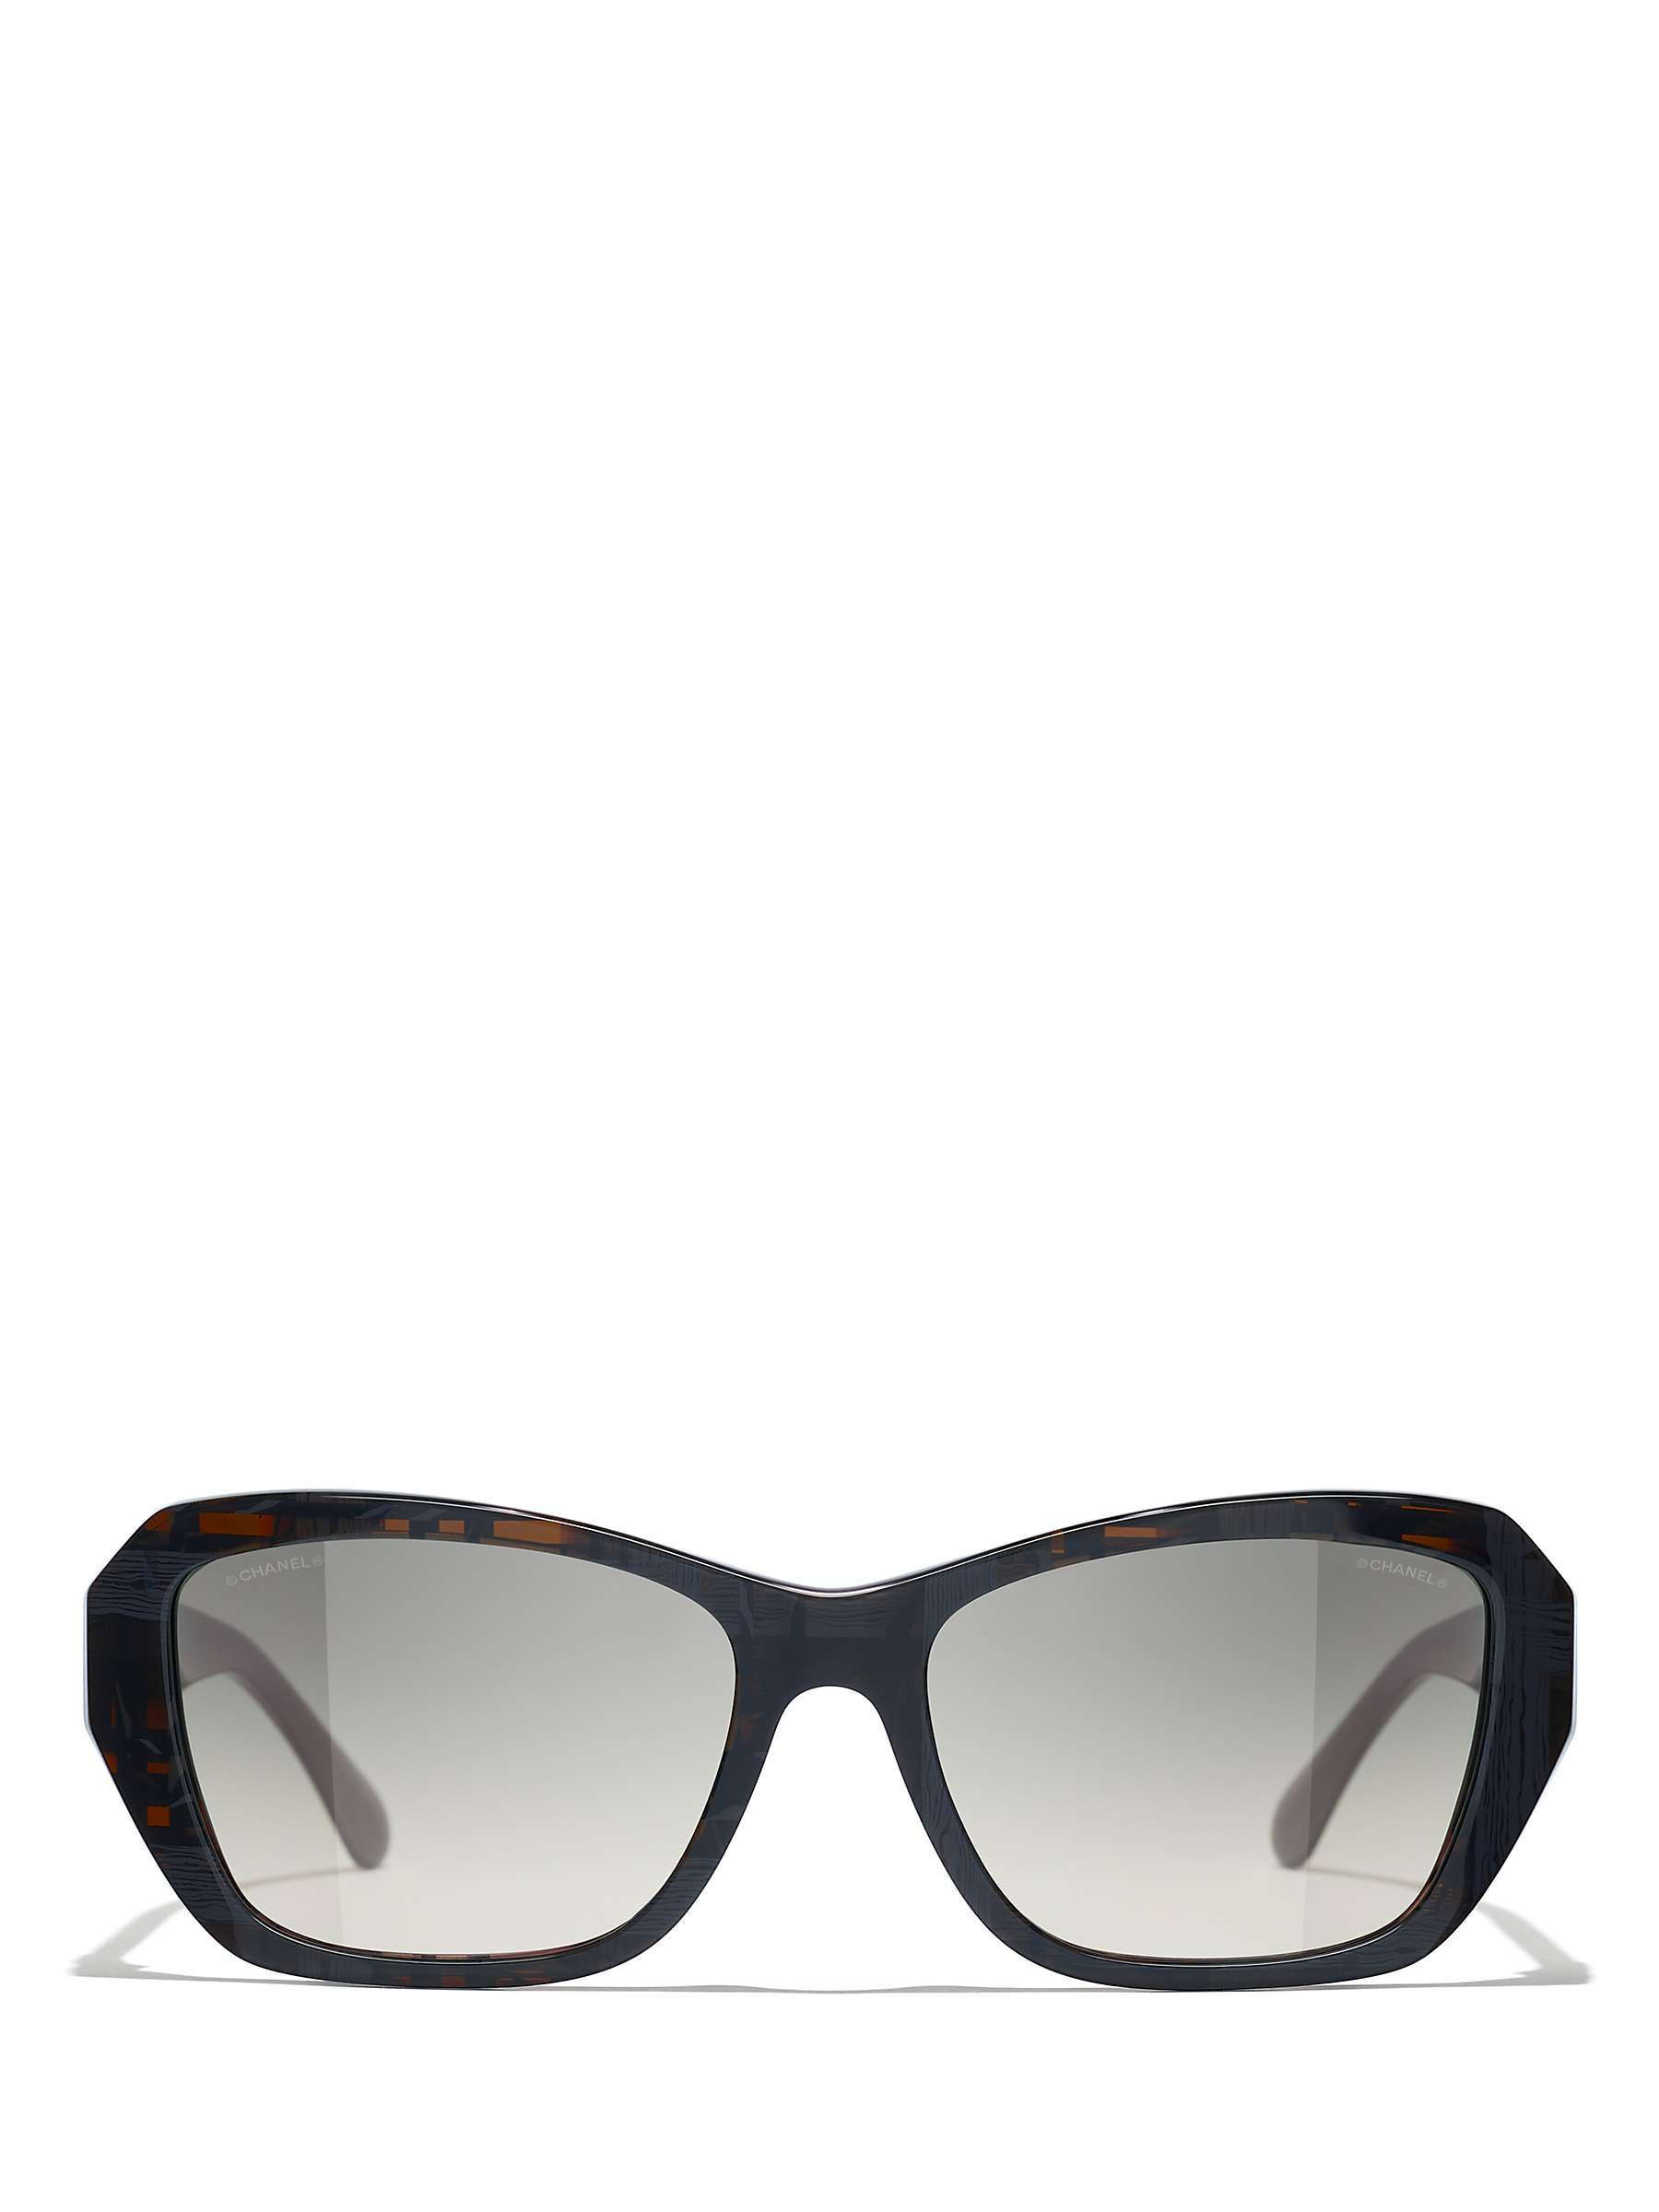 Buy CHANEL Rectangular Sunglasses CH5516 Black Tweed/Grey Gradient Online at johnlewis.com